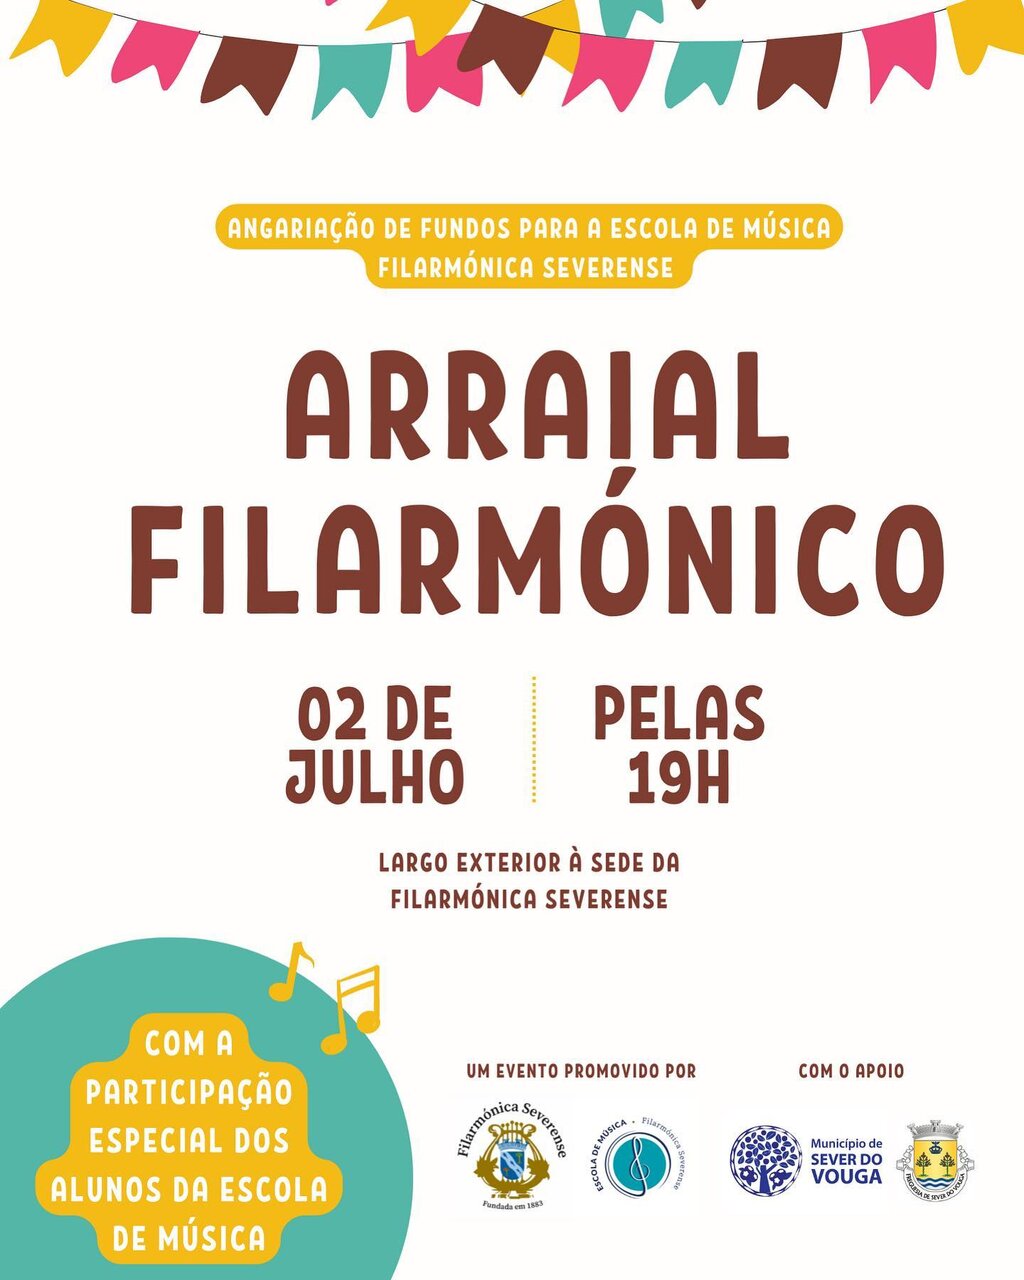 2 Julho - Arraial Filarmónico - Banda Fiarmónica Severense